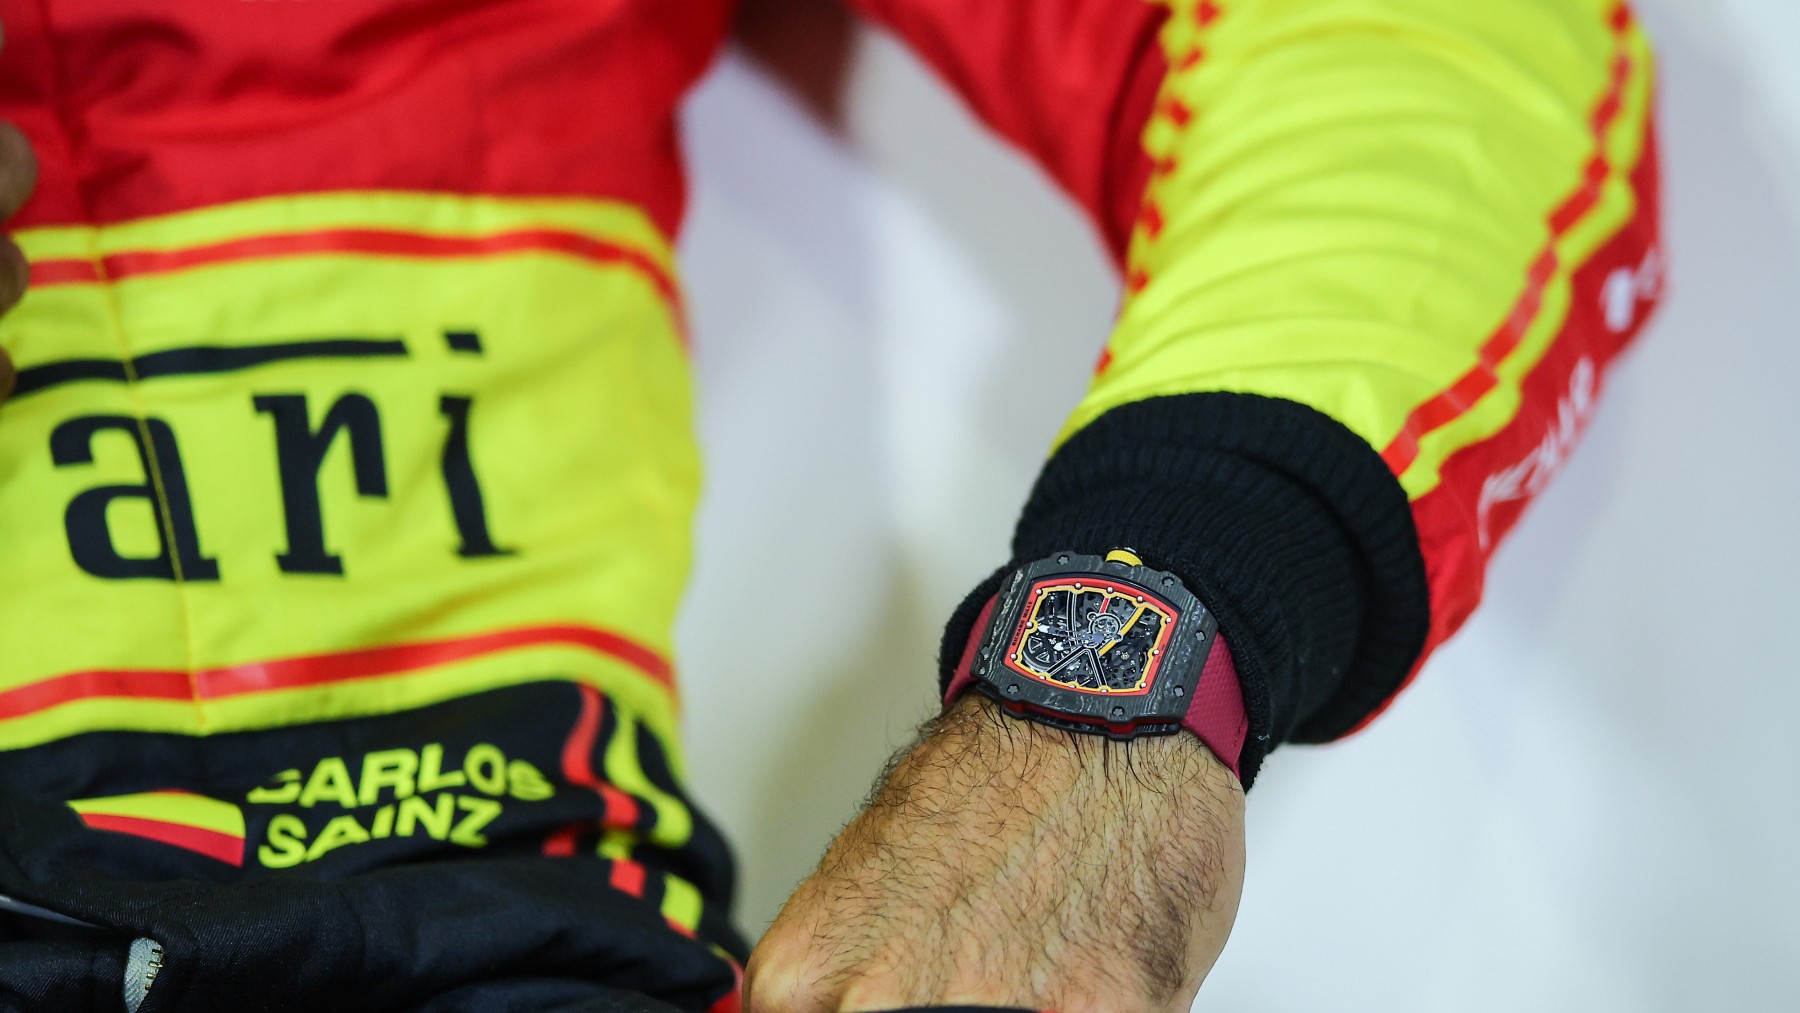 Carlos Sainz, con el reloj Richard Mille RM 67-02 Automatic. (Europa Press)